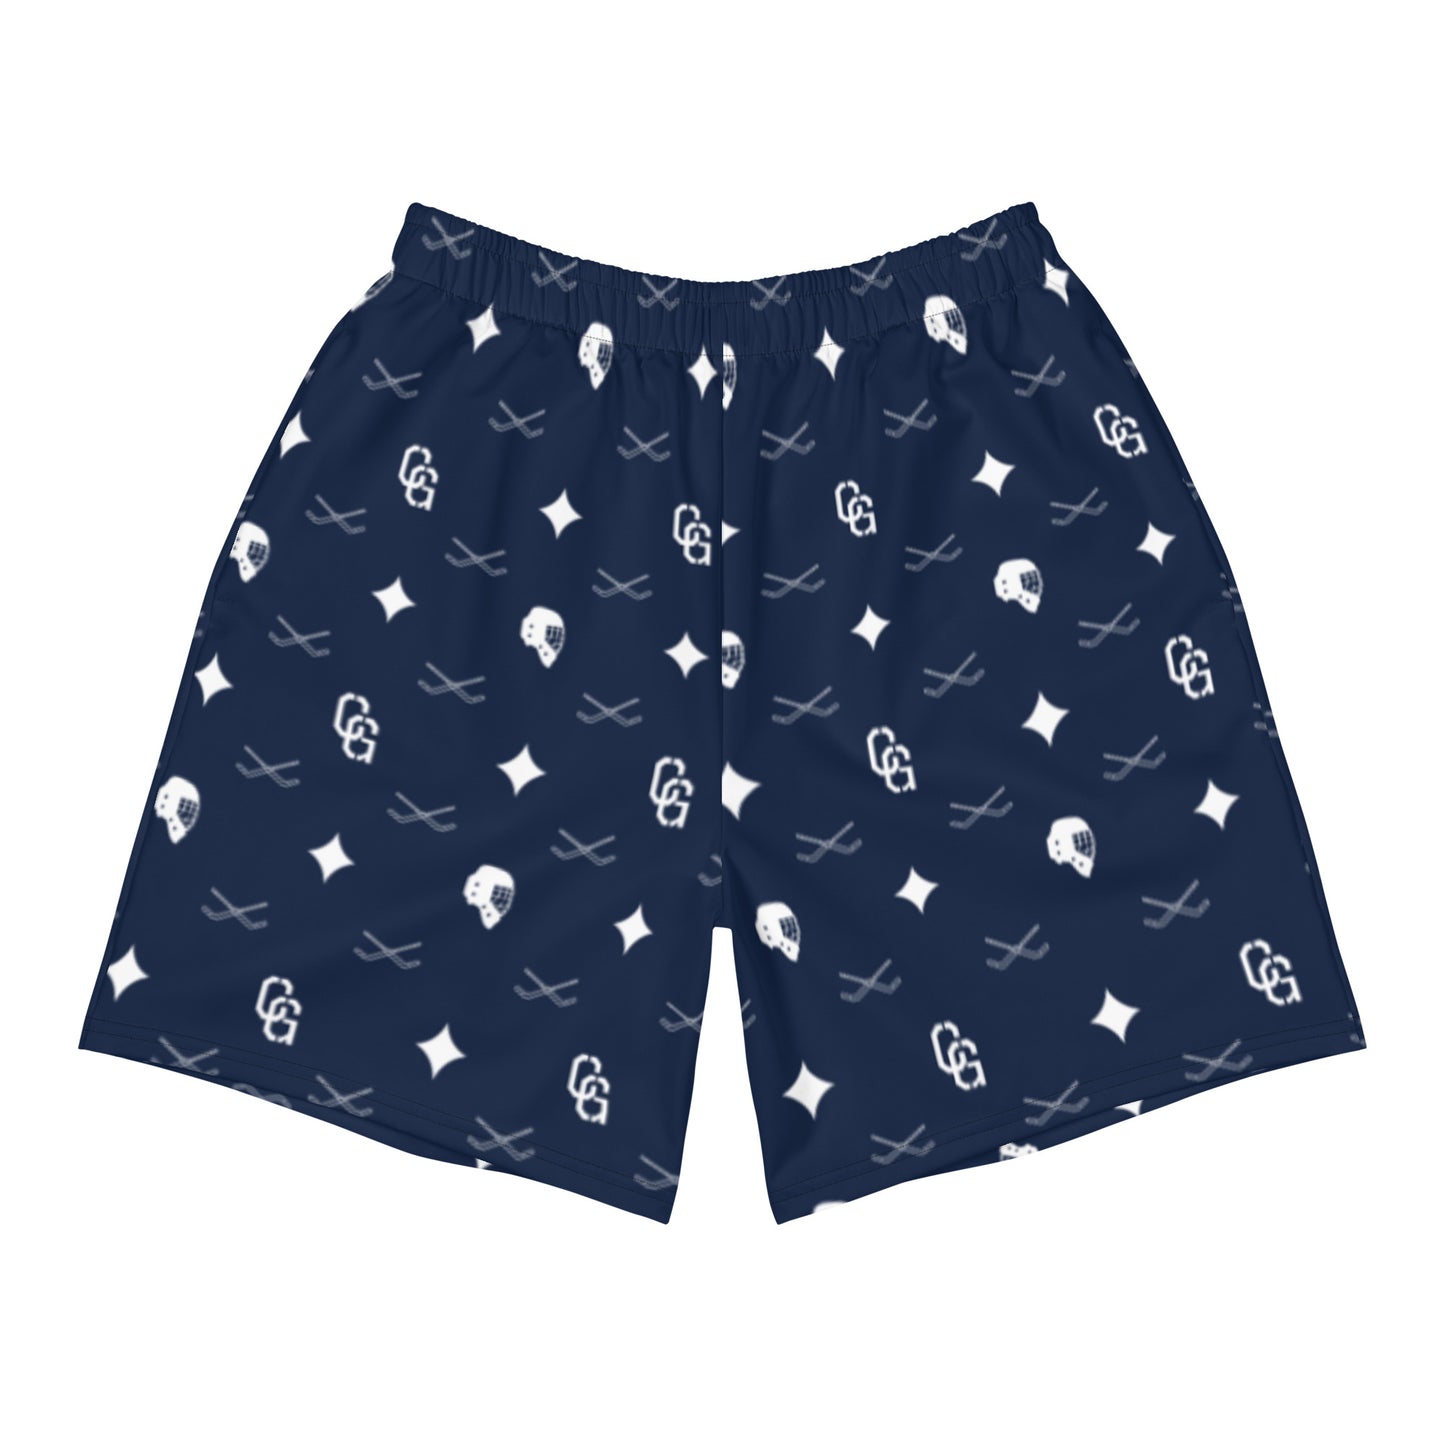 Men's Navy Lux Print Athletic Shorts